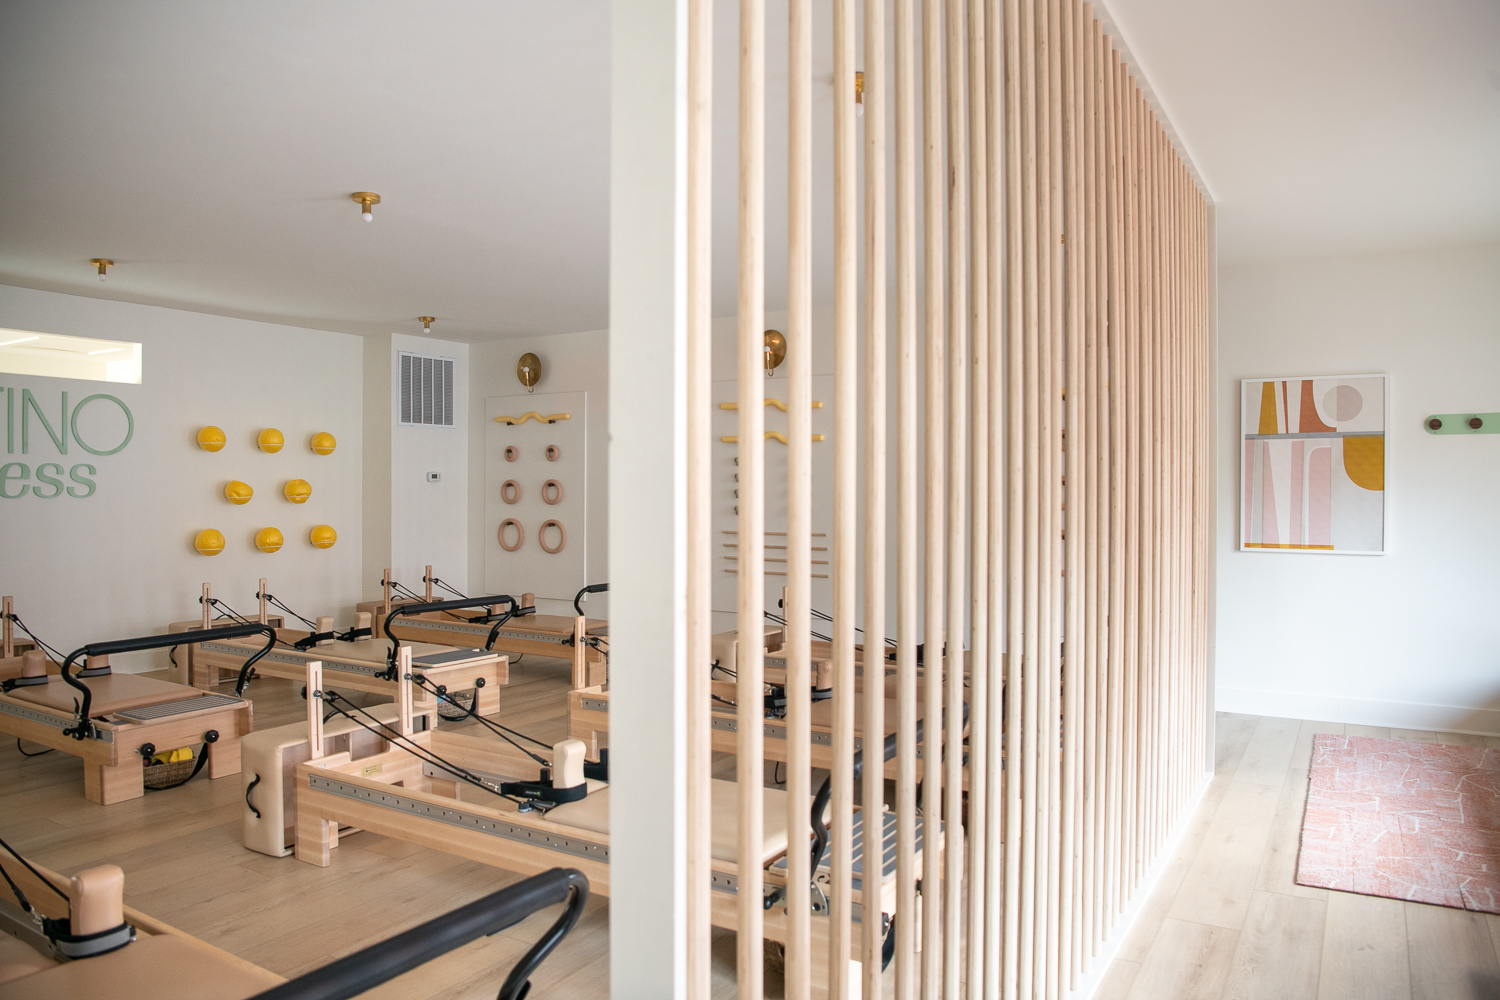 Orofino Wellness pilates studio